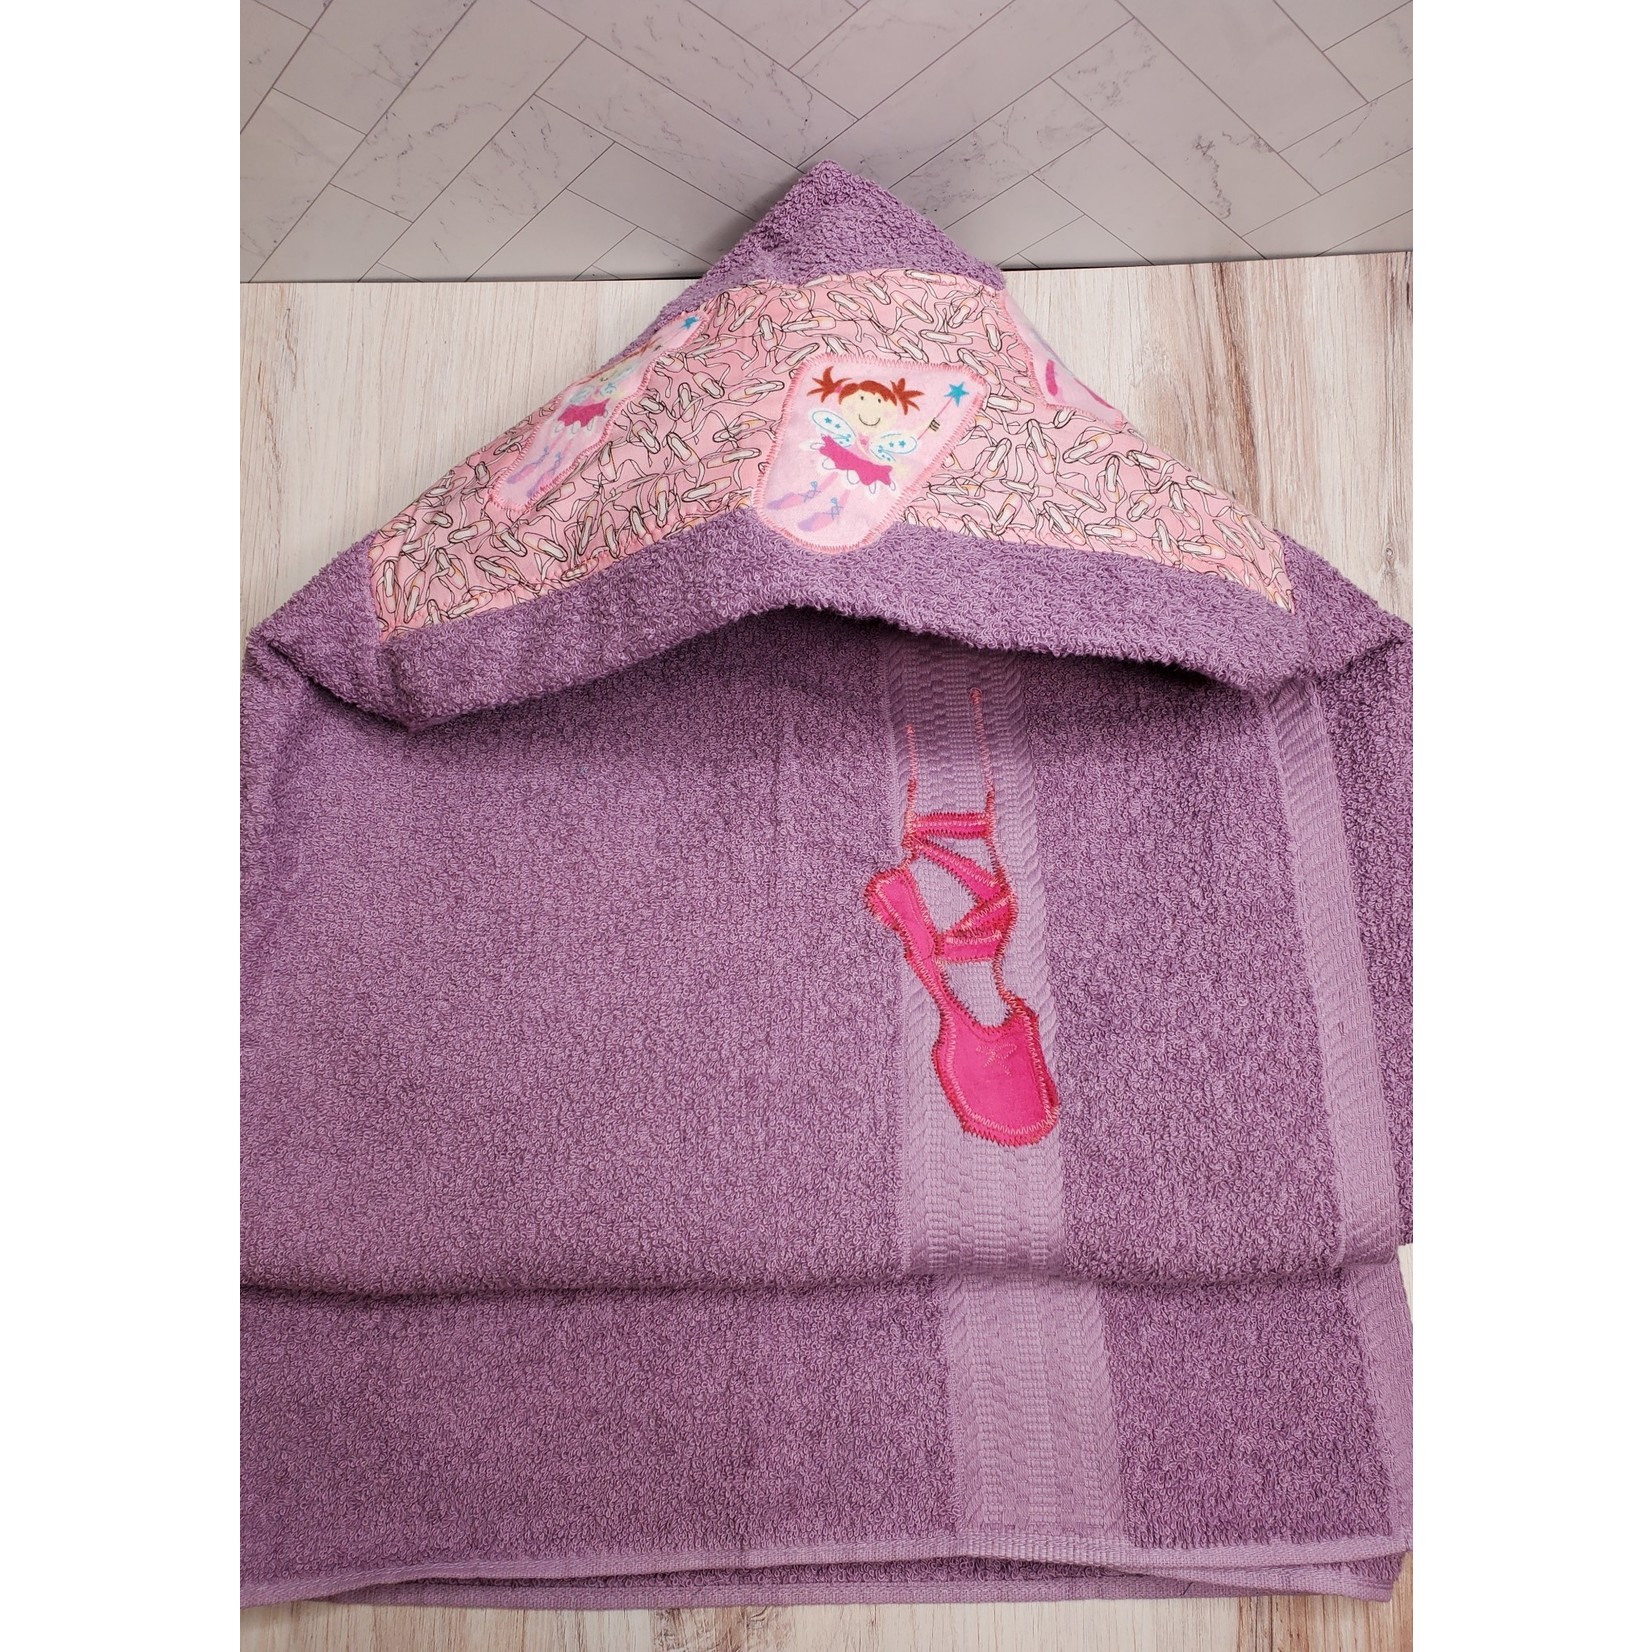 Pottio Studery Ballerina Hooded Bath Towel - Purple